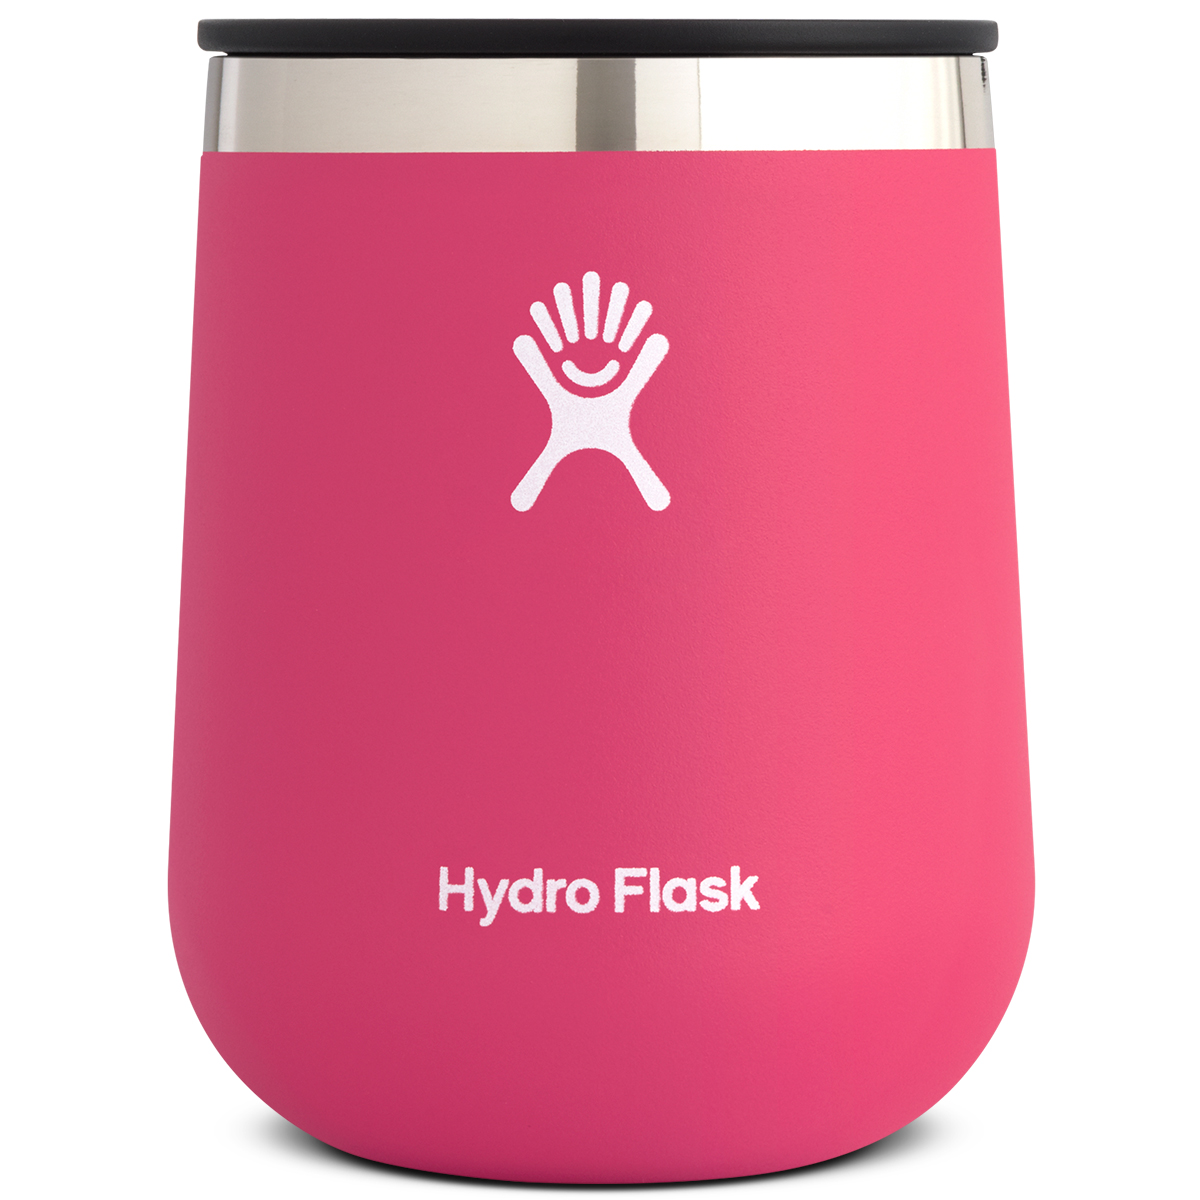 Hydro Flask 10 Oz. Wine Tumbler - Red, ONESIZE